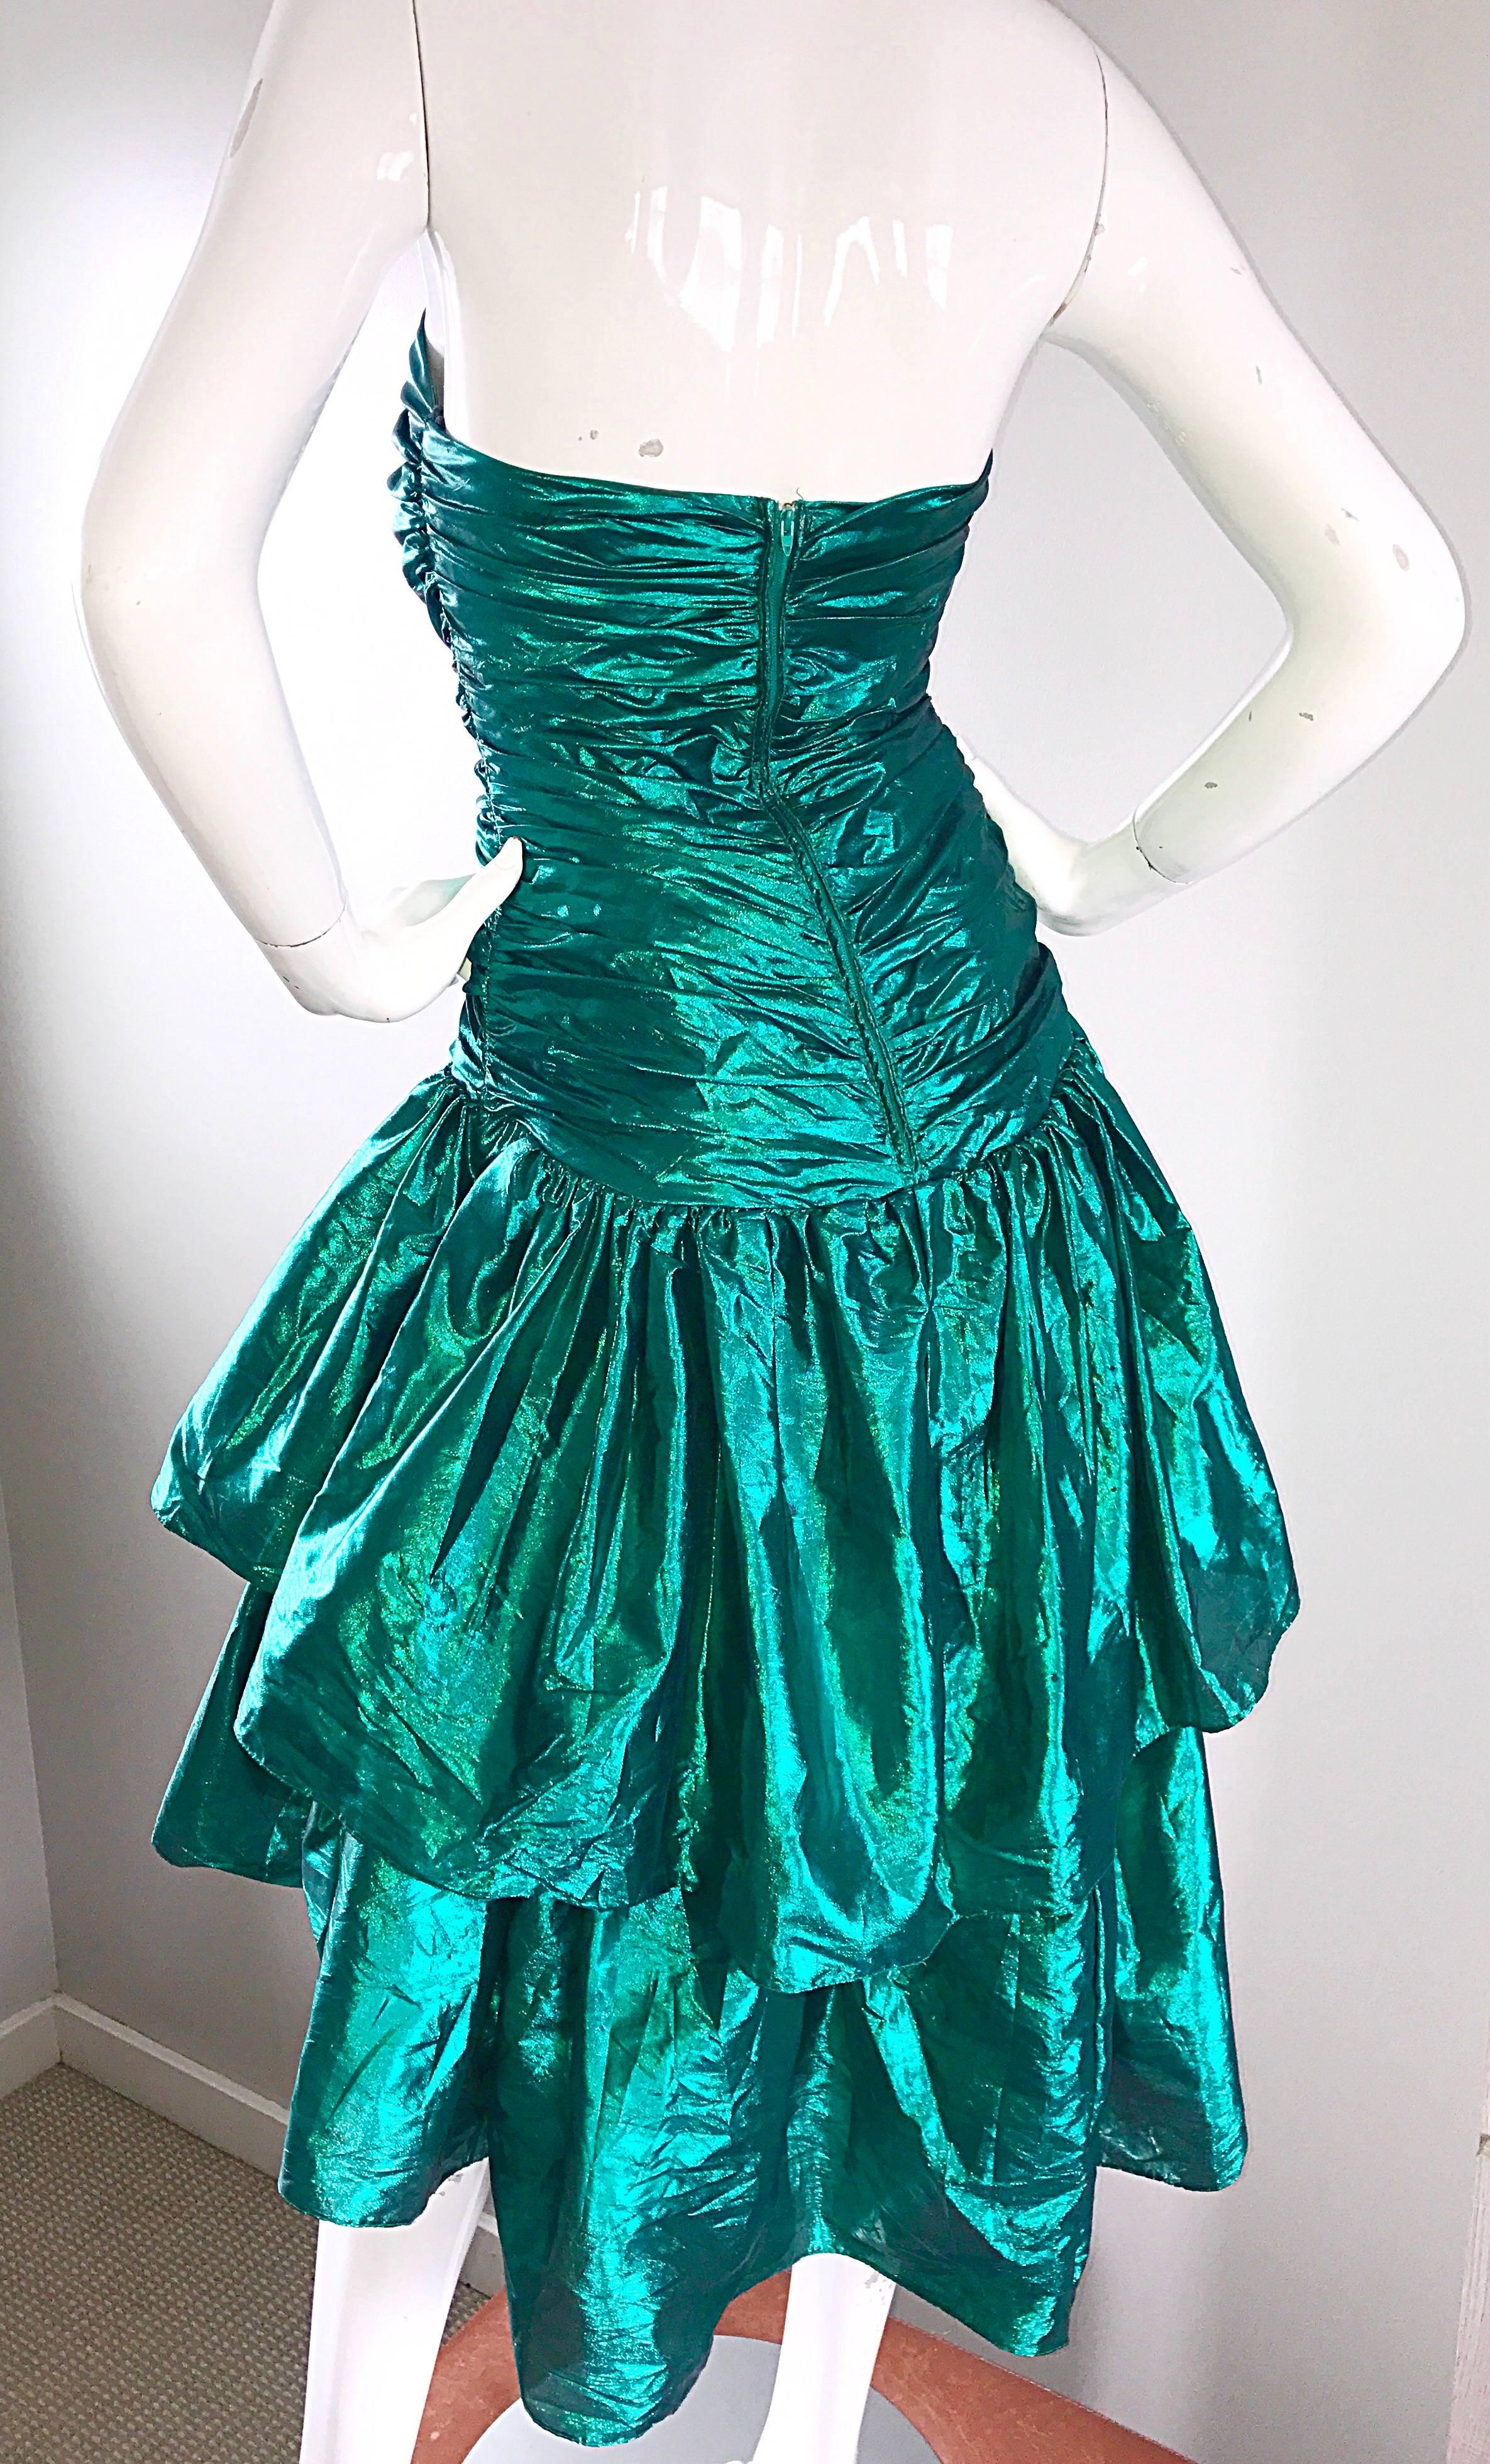 Betsey Johnson 1980s Metallic Green Lame High Low Vintage 80s Strapless Dress 1